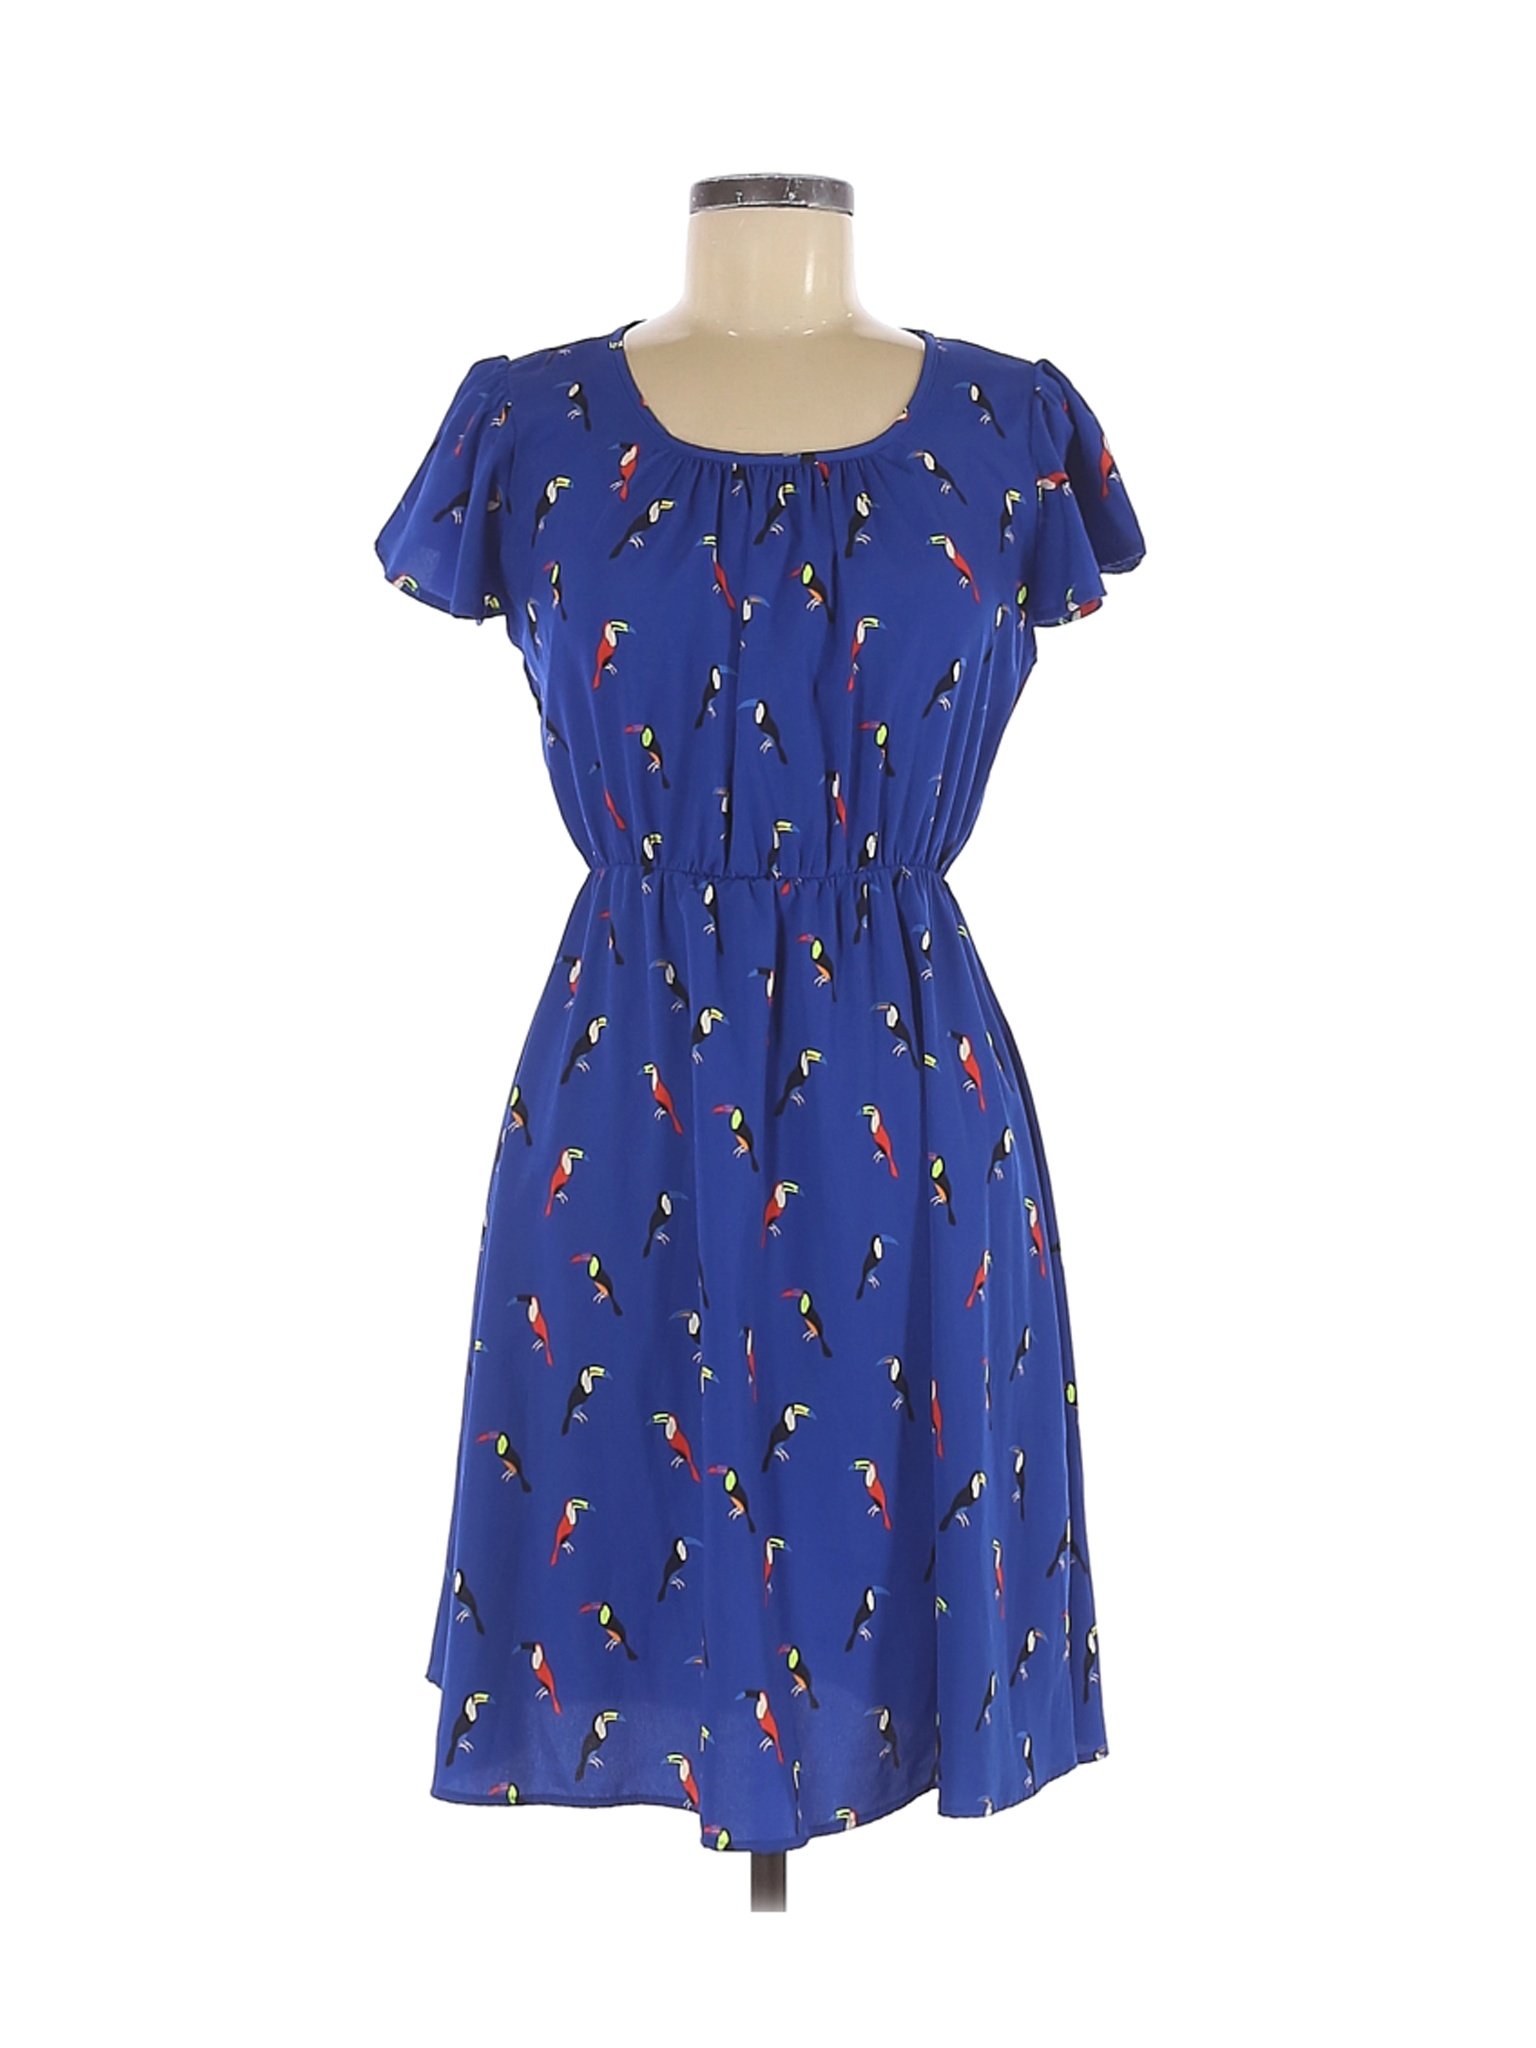 NWT West Kei Women Blue Casual Dress S | eBay